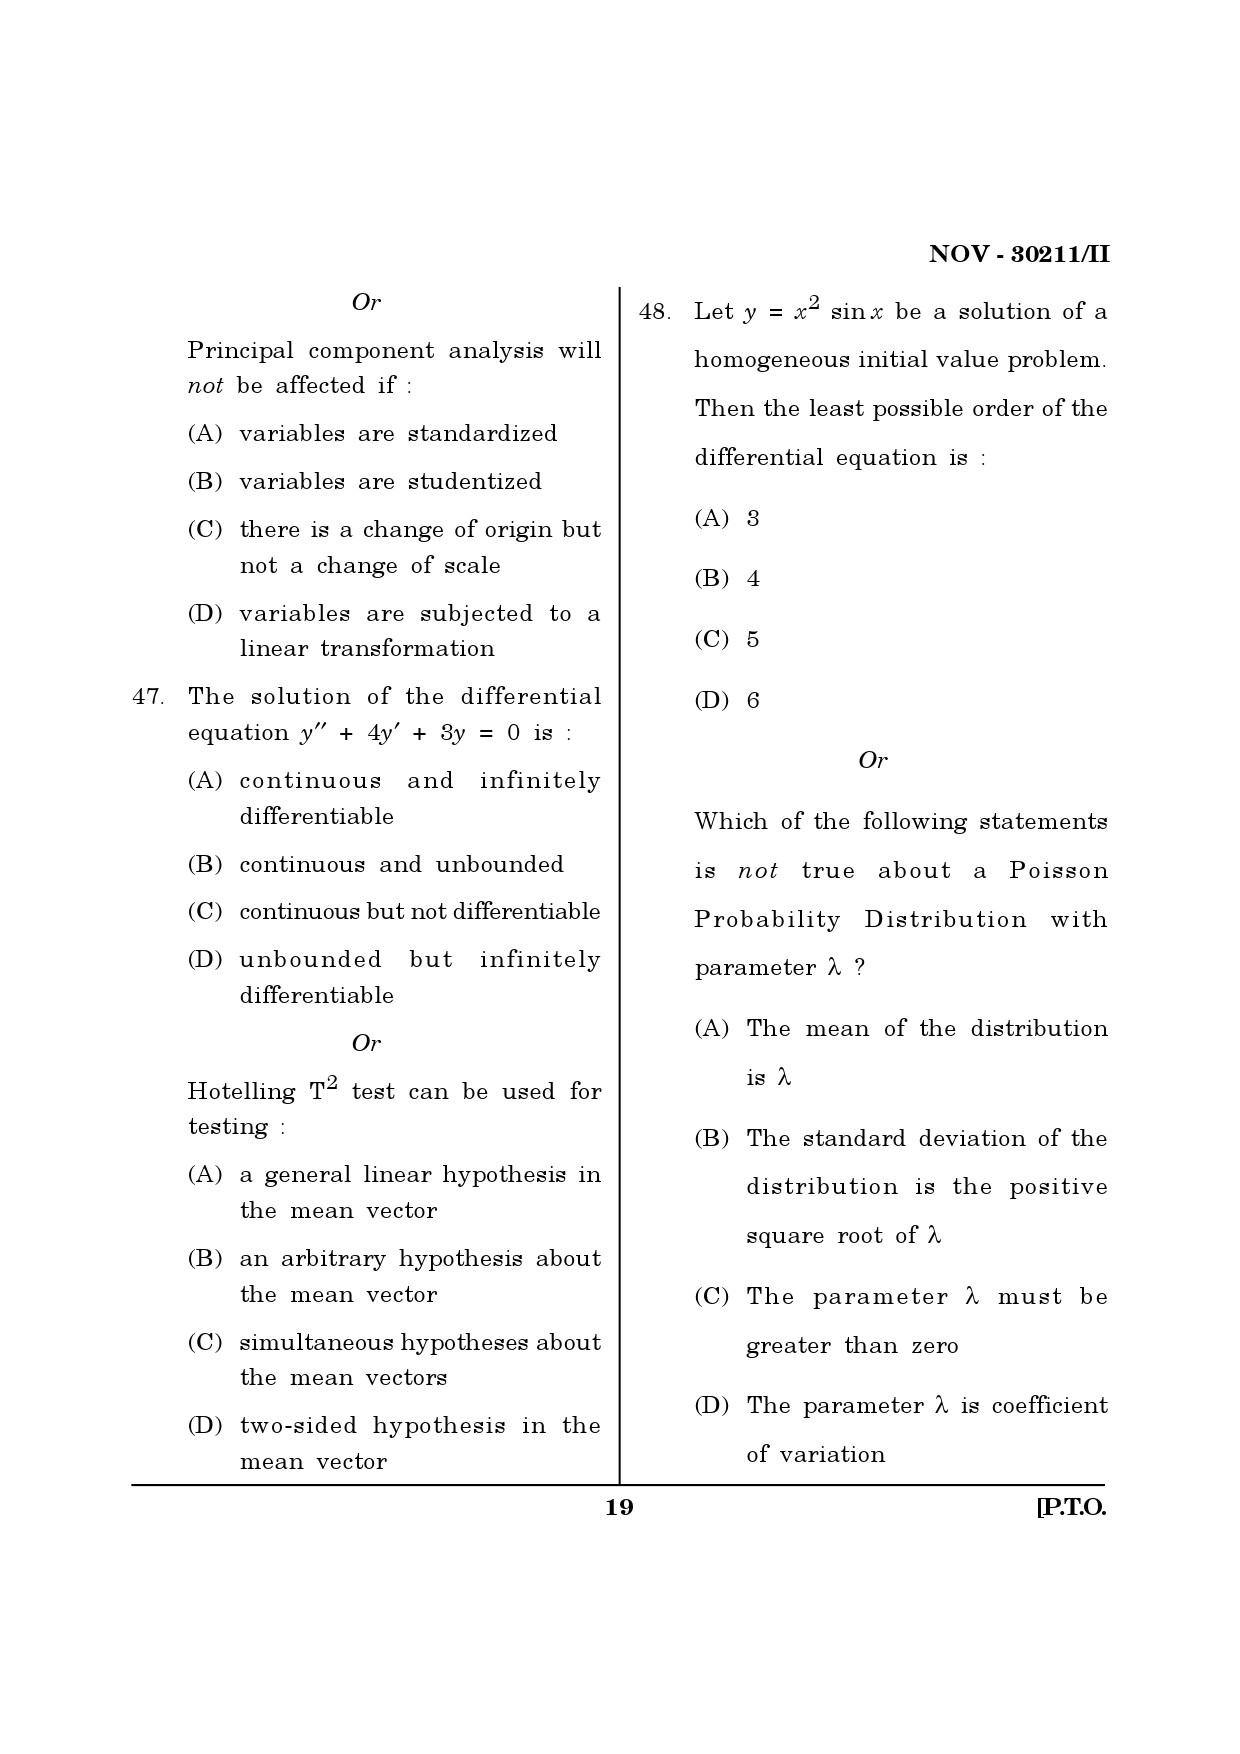 Maharashtra SET Mathematical Sciences Question Paper II November 2011 19